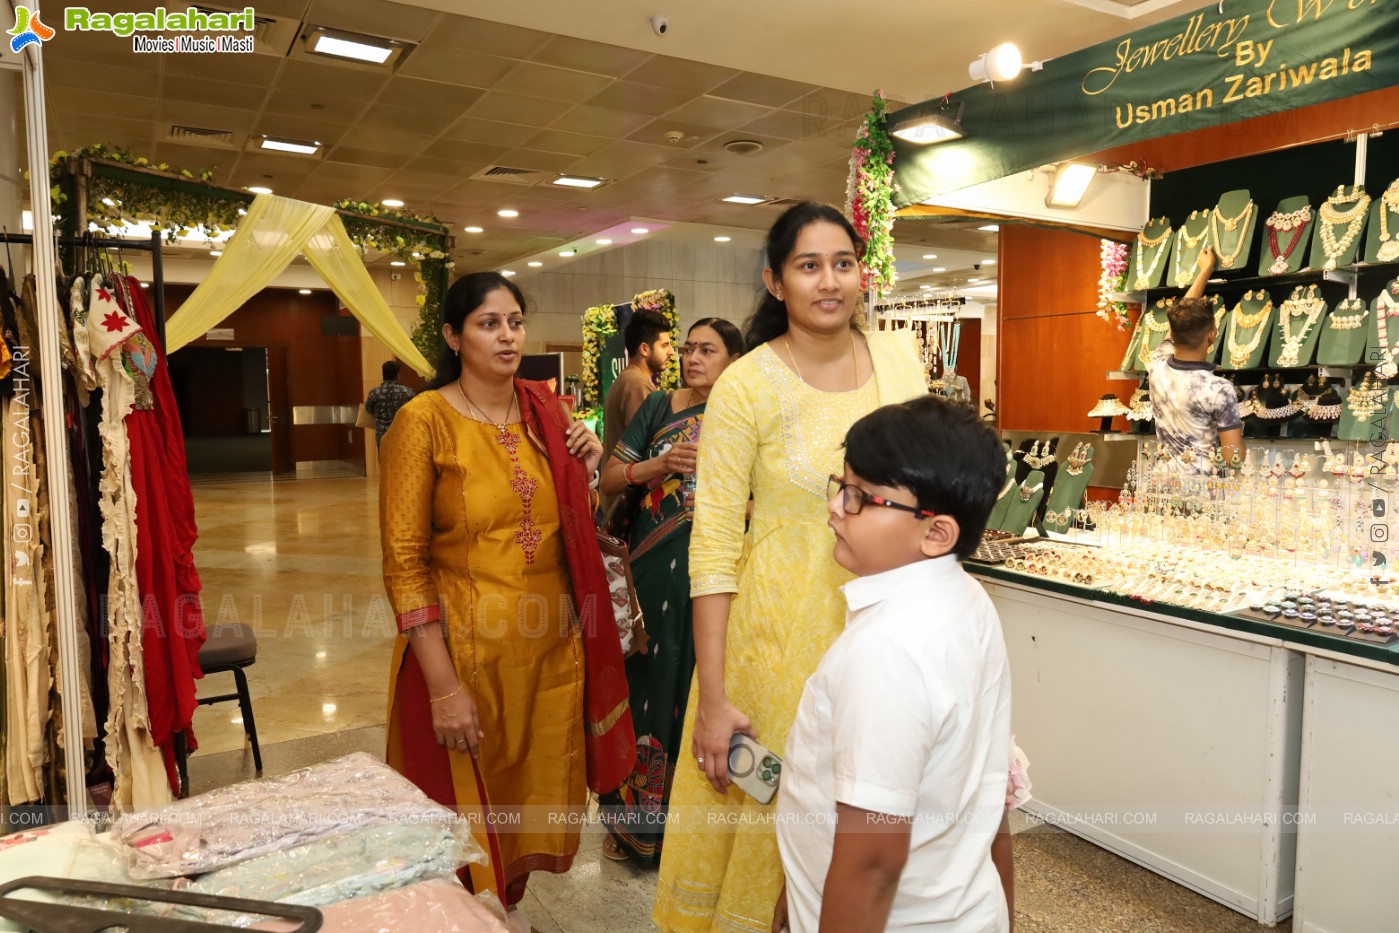 Actress Rashi Singh Inaugurated Sutraa Exhibition at HICC-Novotel, Hyderabad